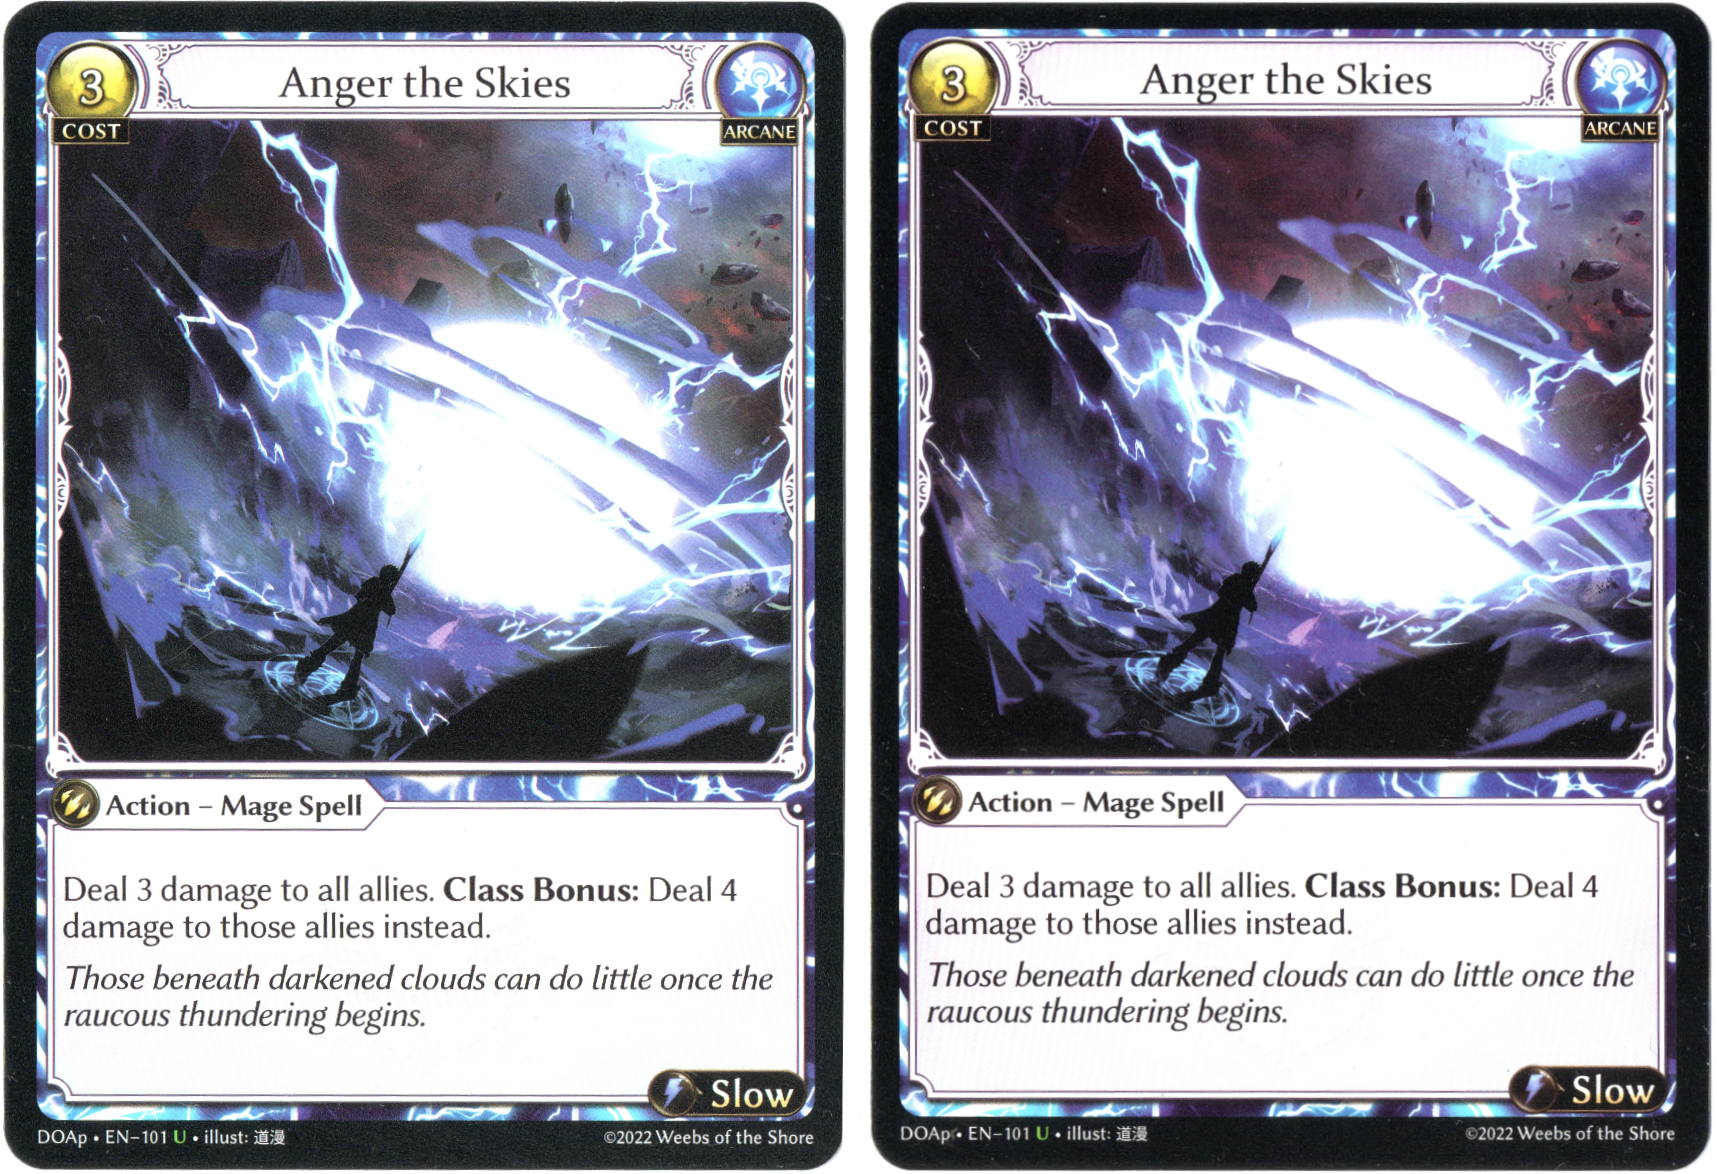 DOAp Anger the Skies starter deck print (left) vs booster pack print (right).